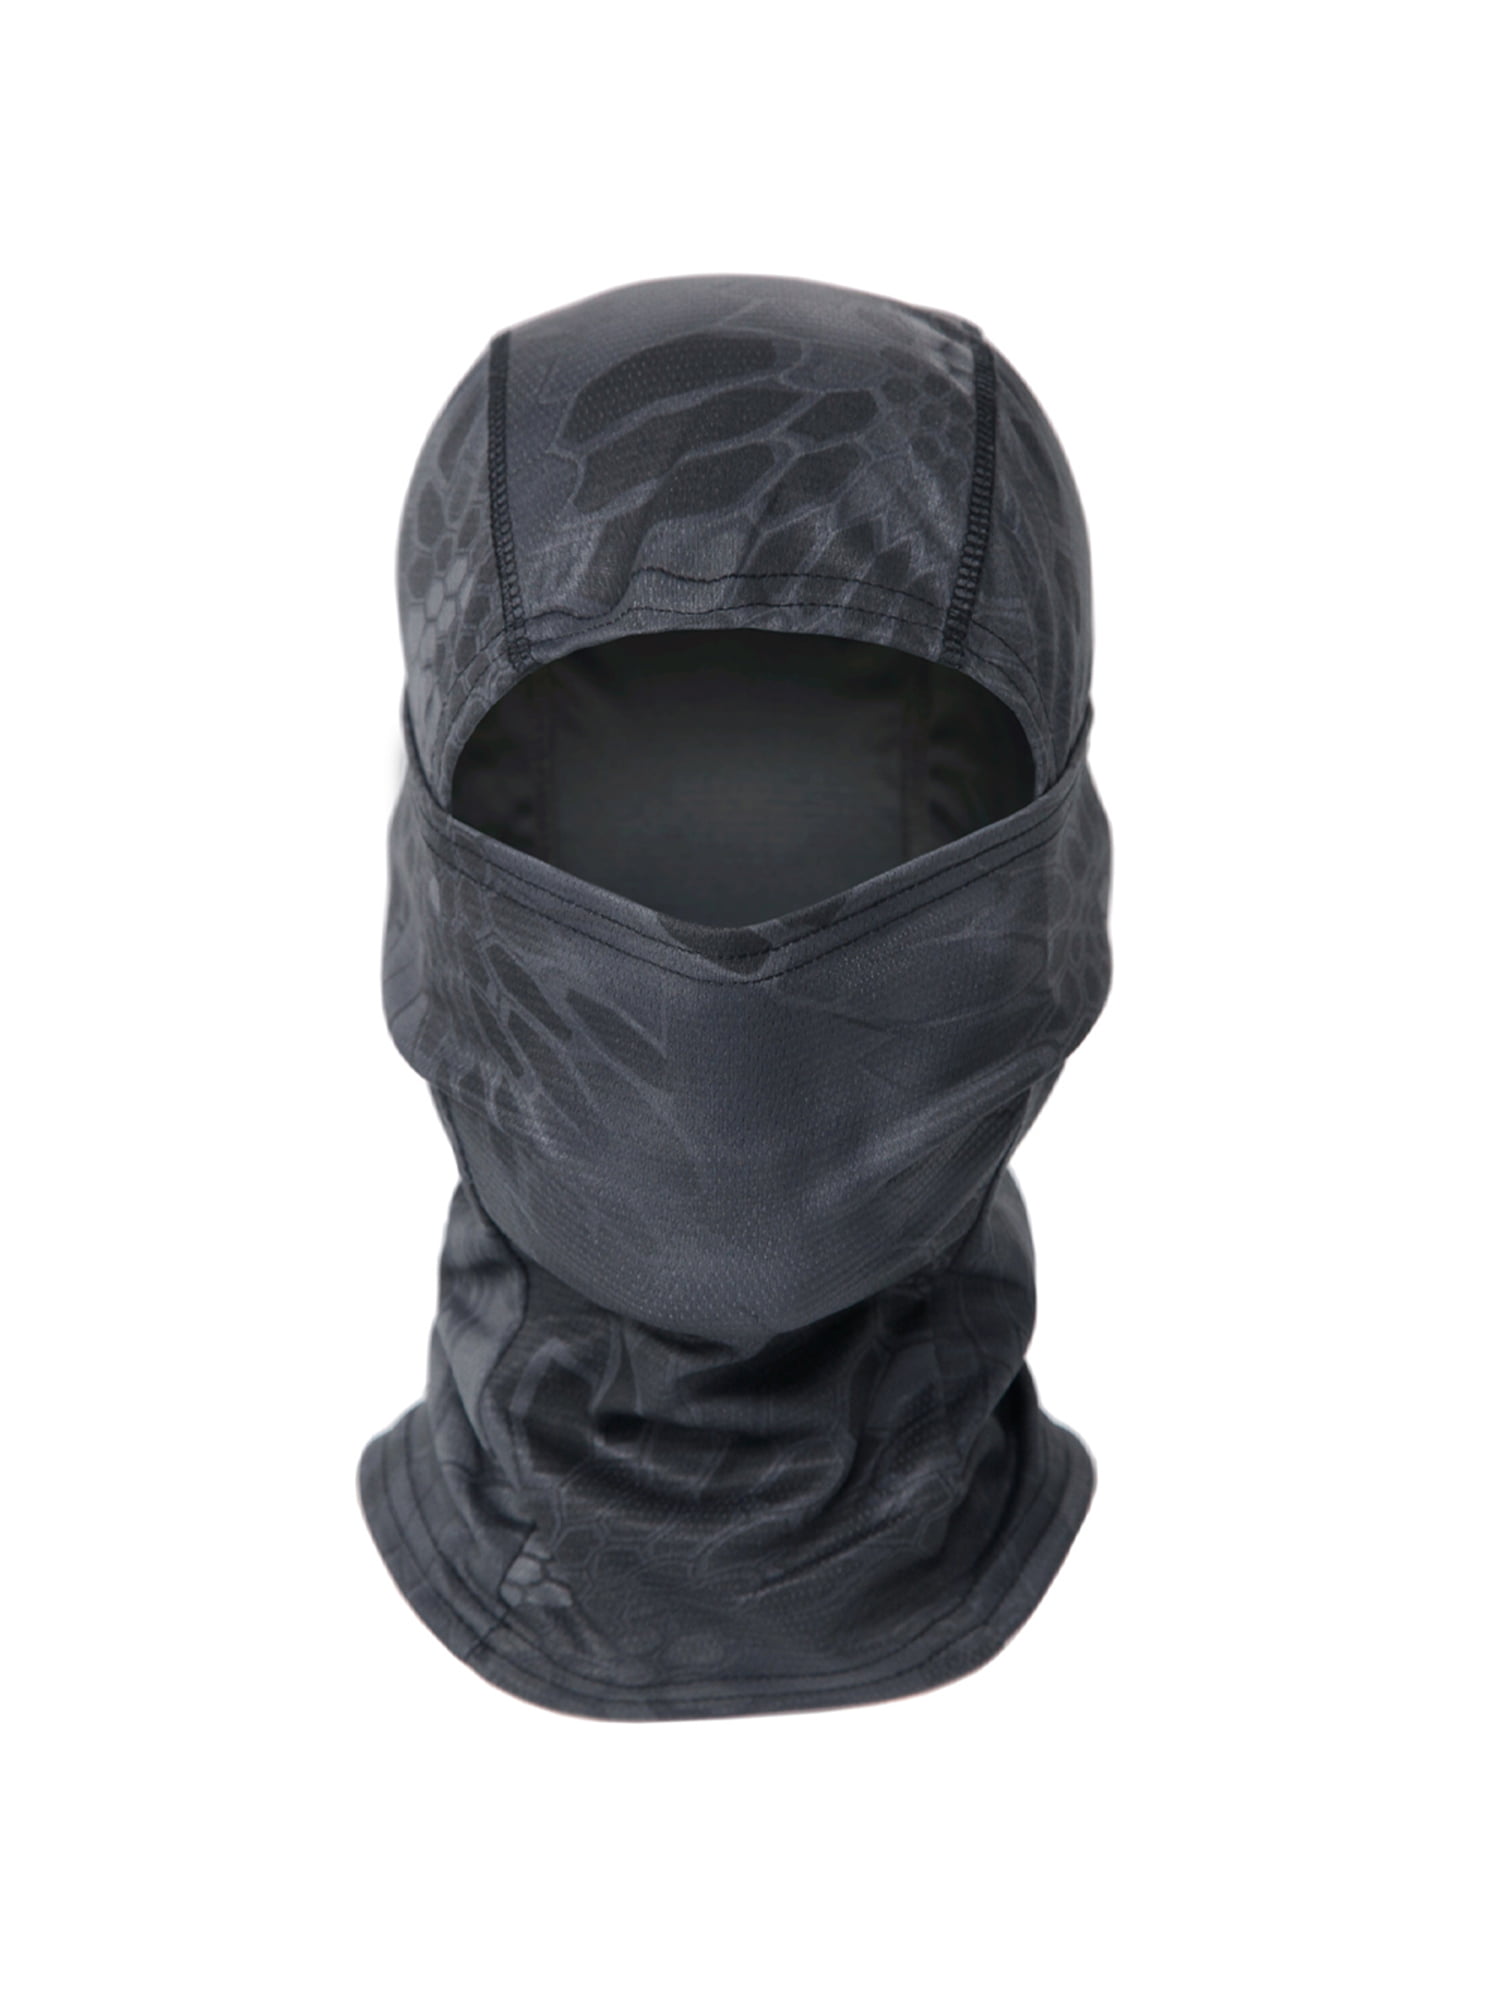 Tactical Camo Hunting Balaclava Hood Face Neck Mask Scarves Gaiter Headwear Hats 